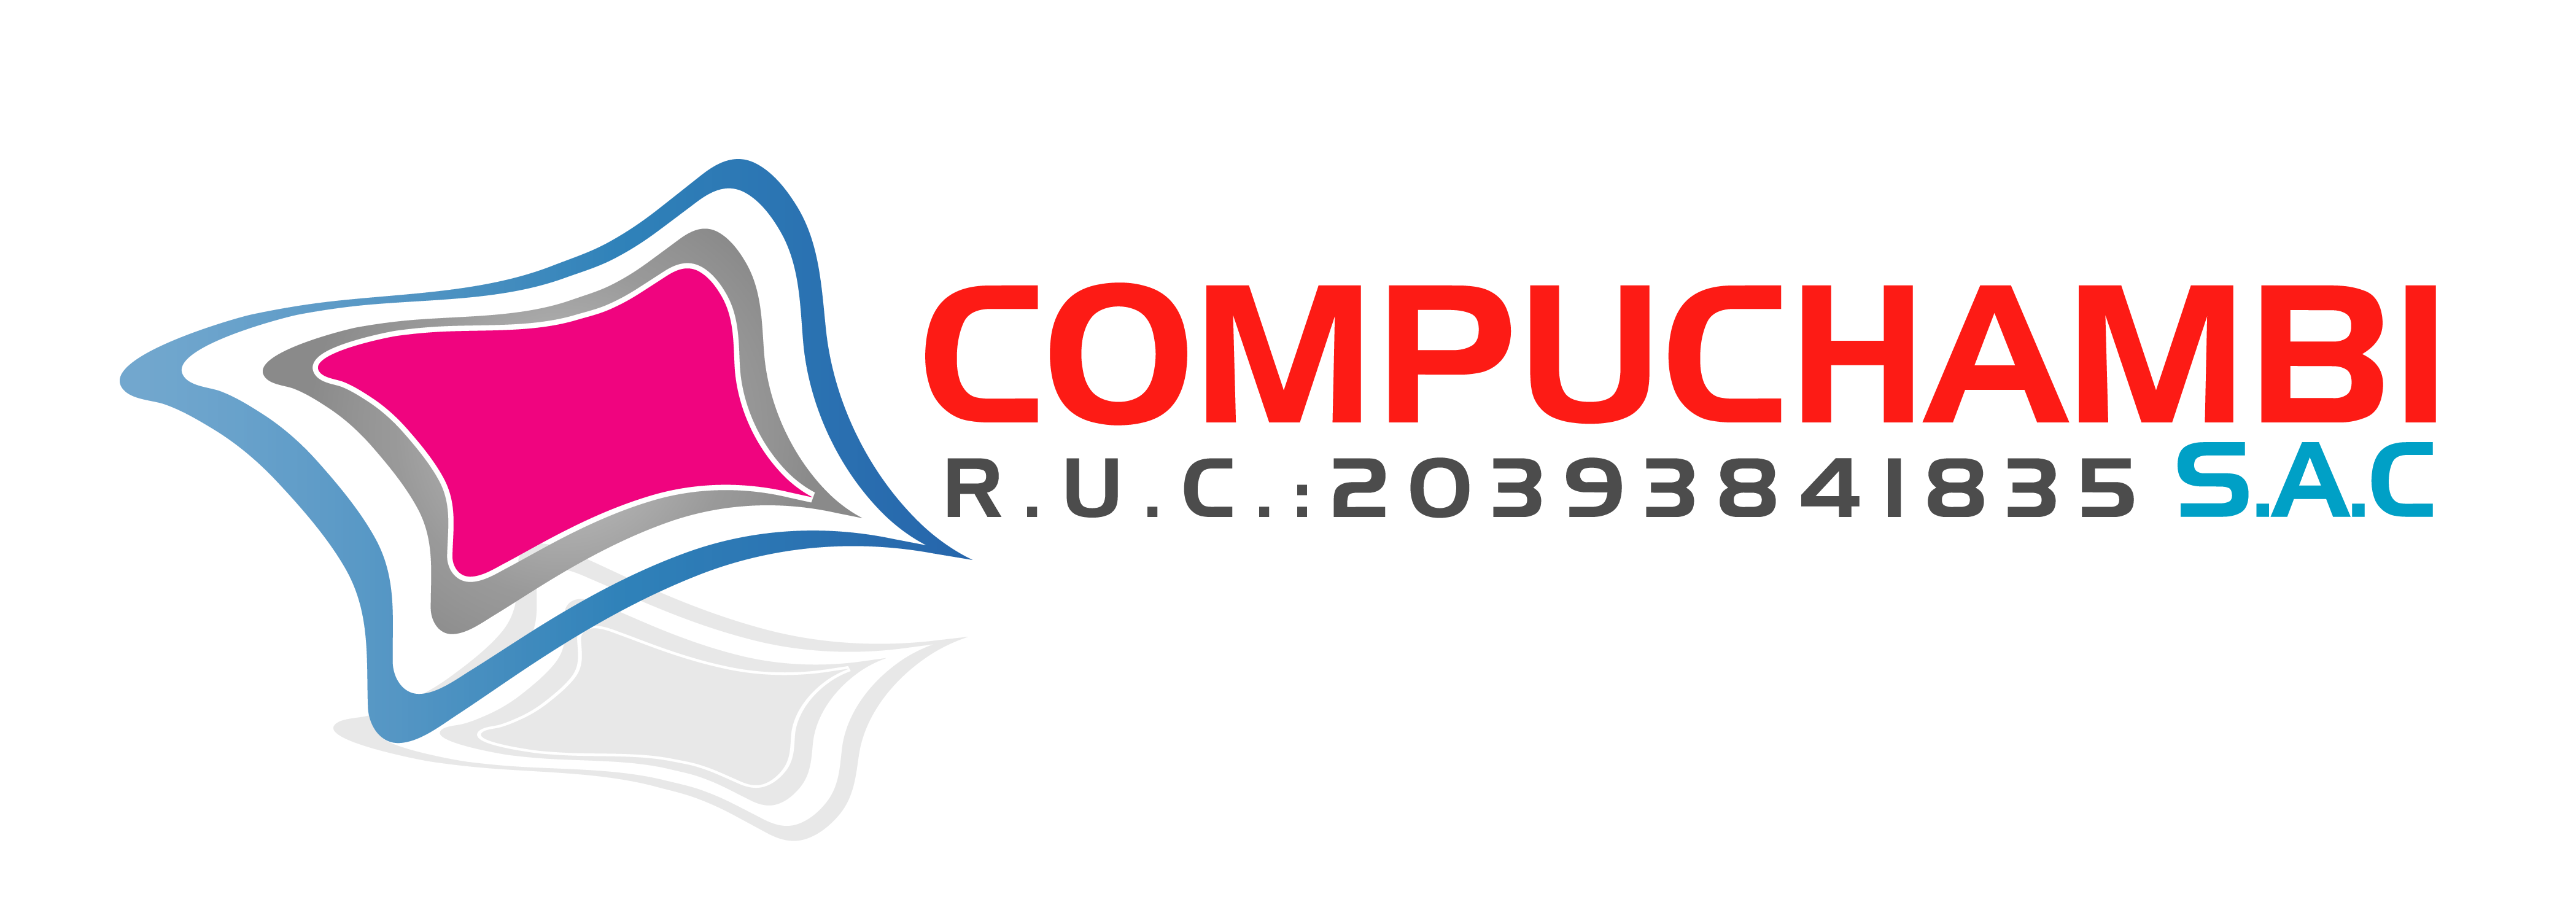 compuchambi-01